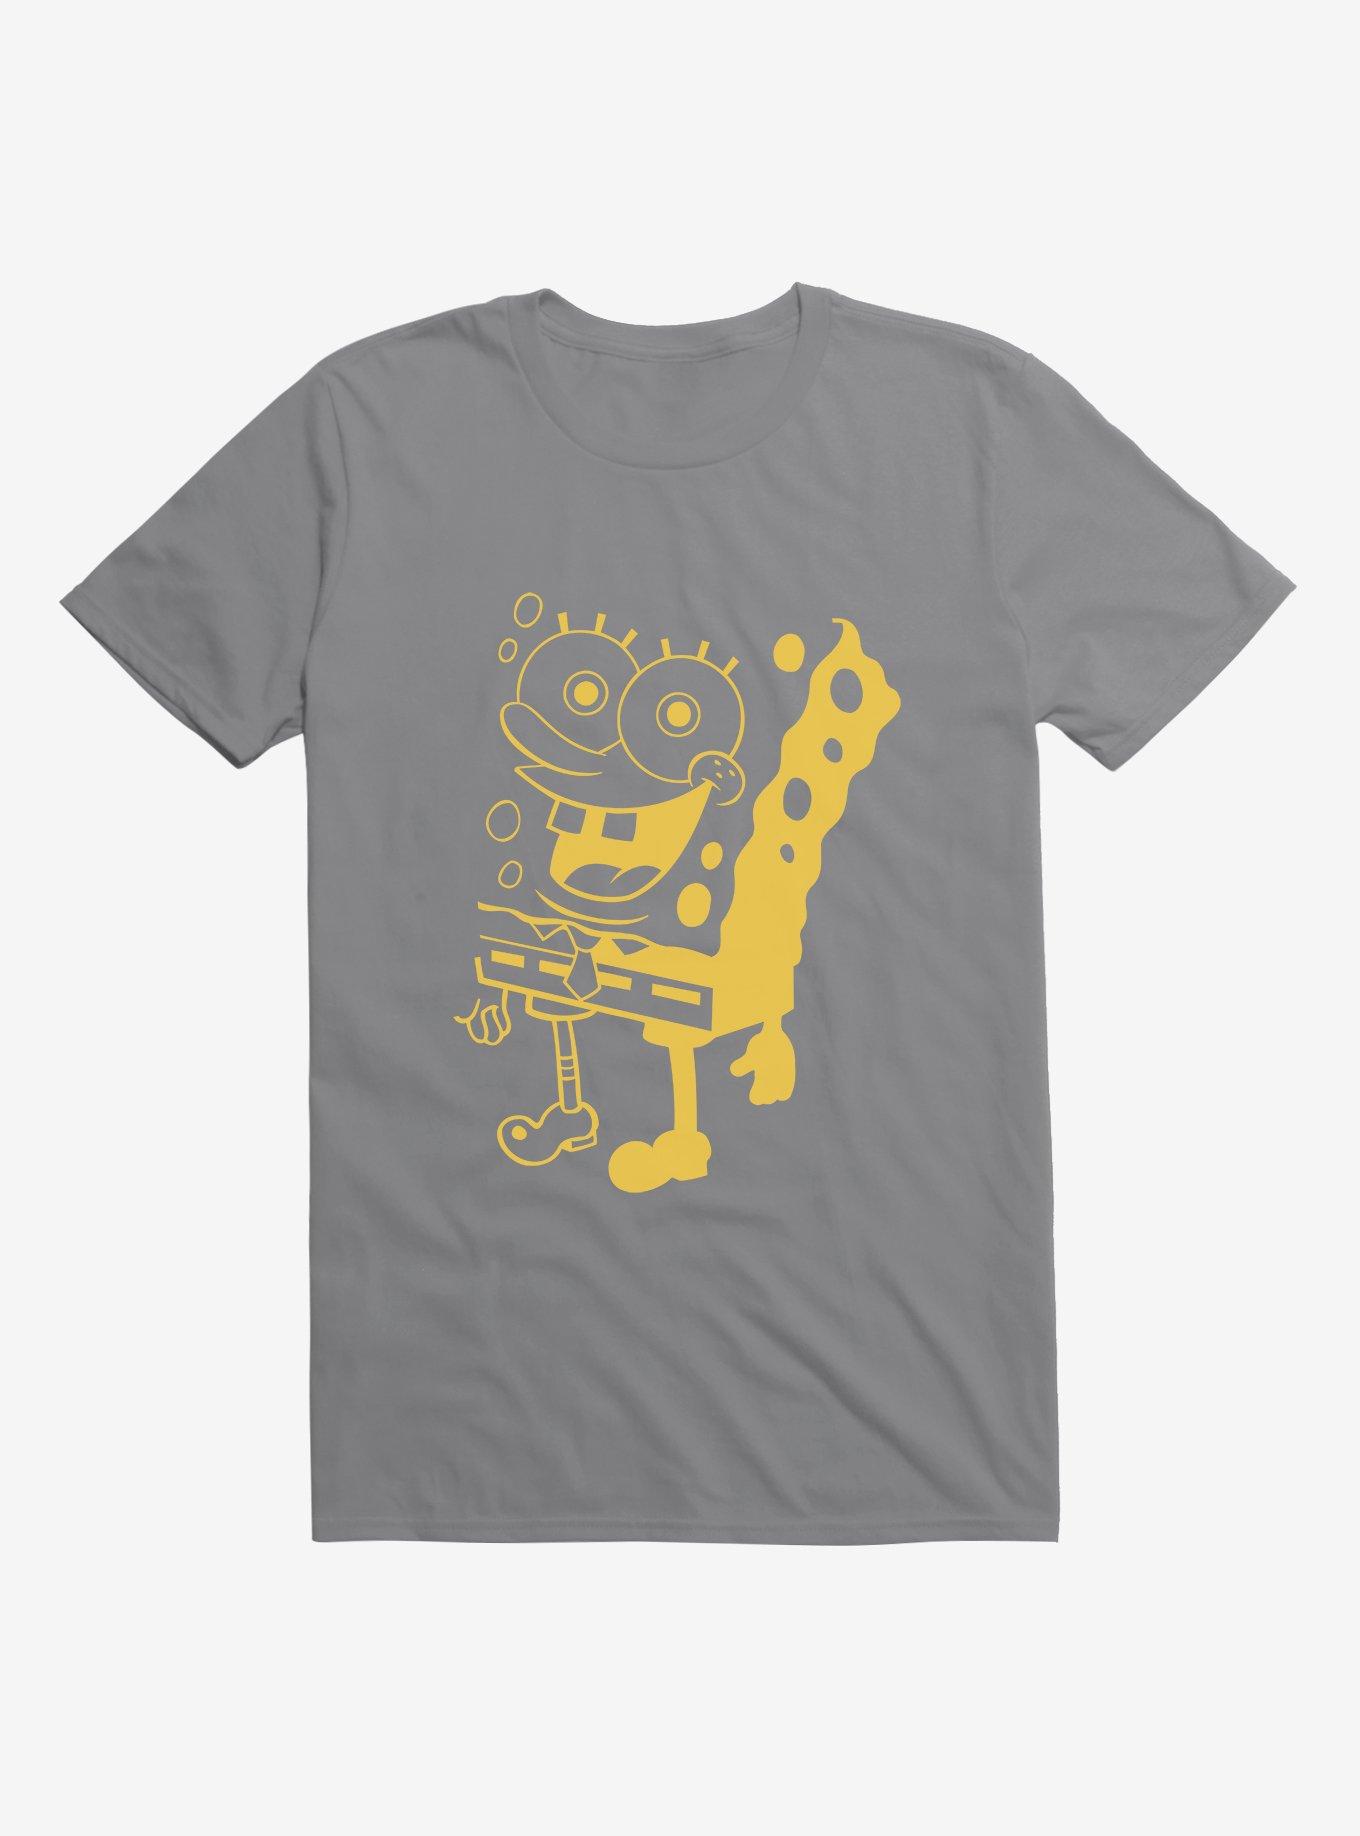 Hot Topic SpongeBob SquarePants Shadowed Outline T-Shirt | Hamilton Place